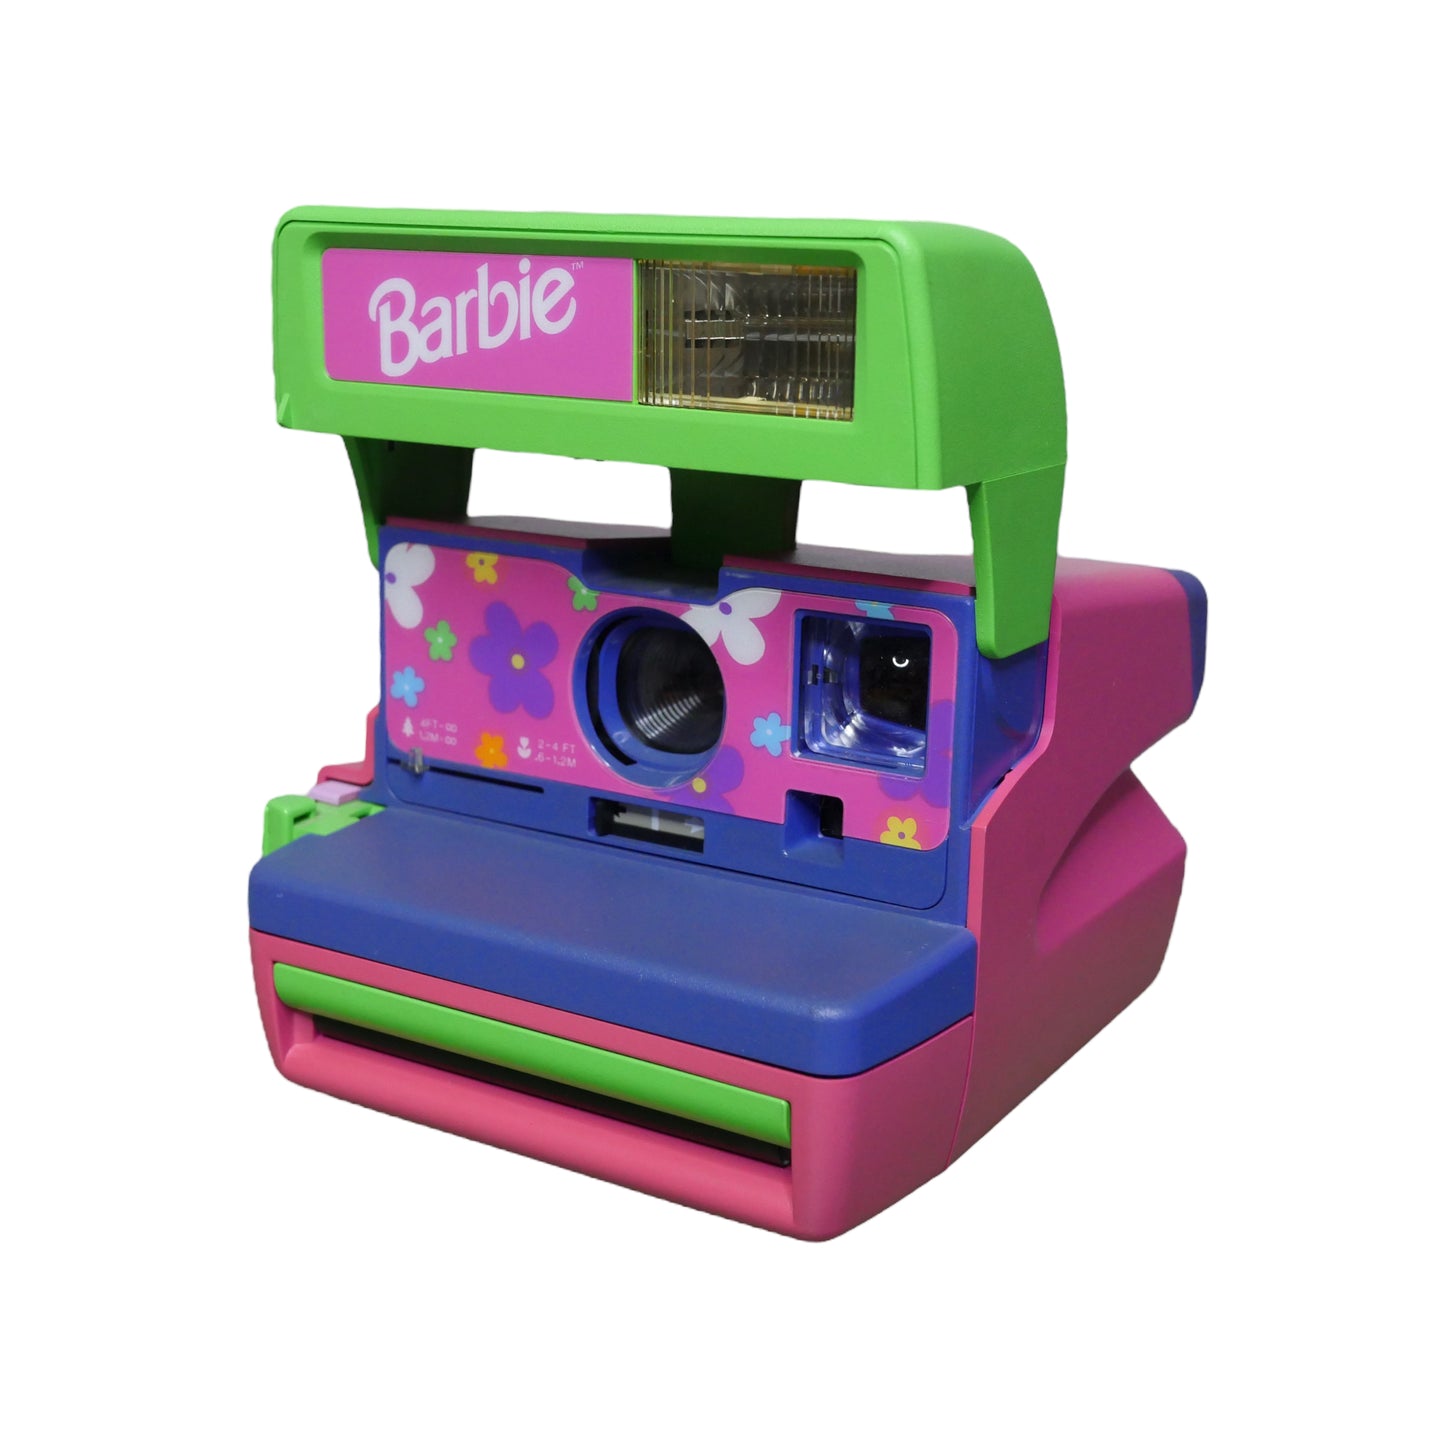 Polaroid 600 - Barbie Special Edition